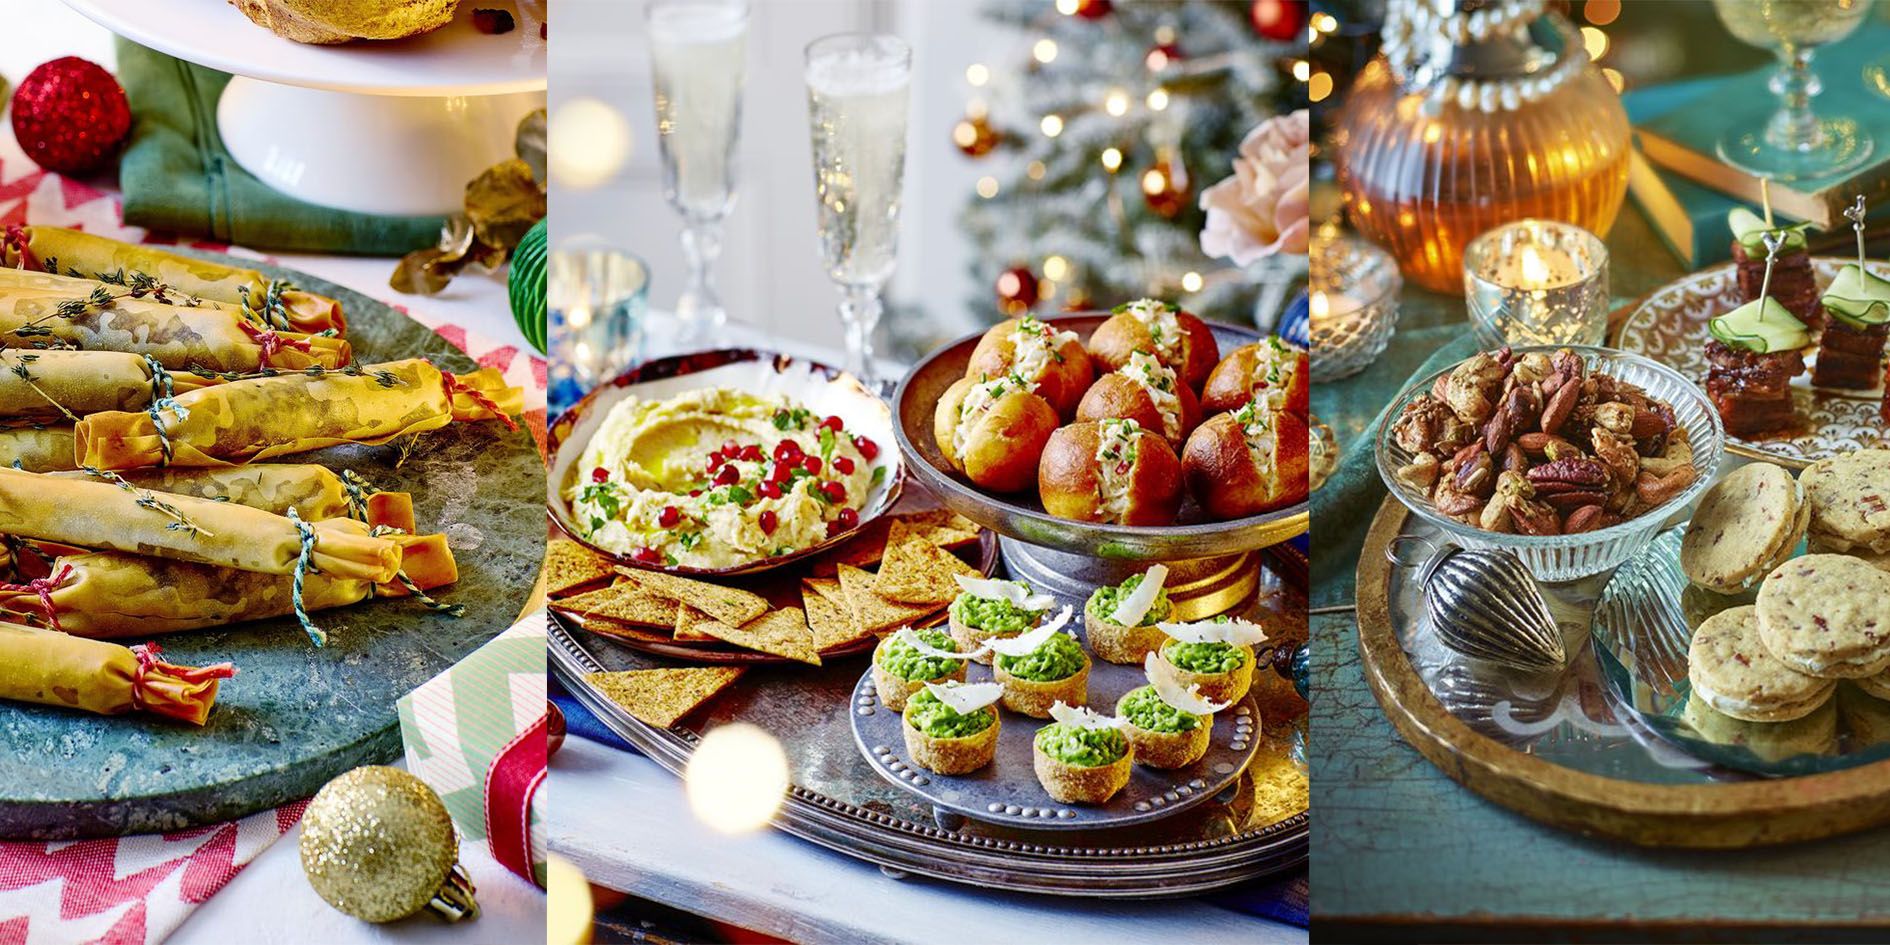 christmas party food ideas buffet